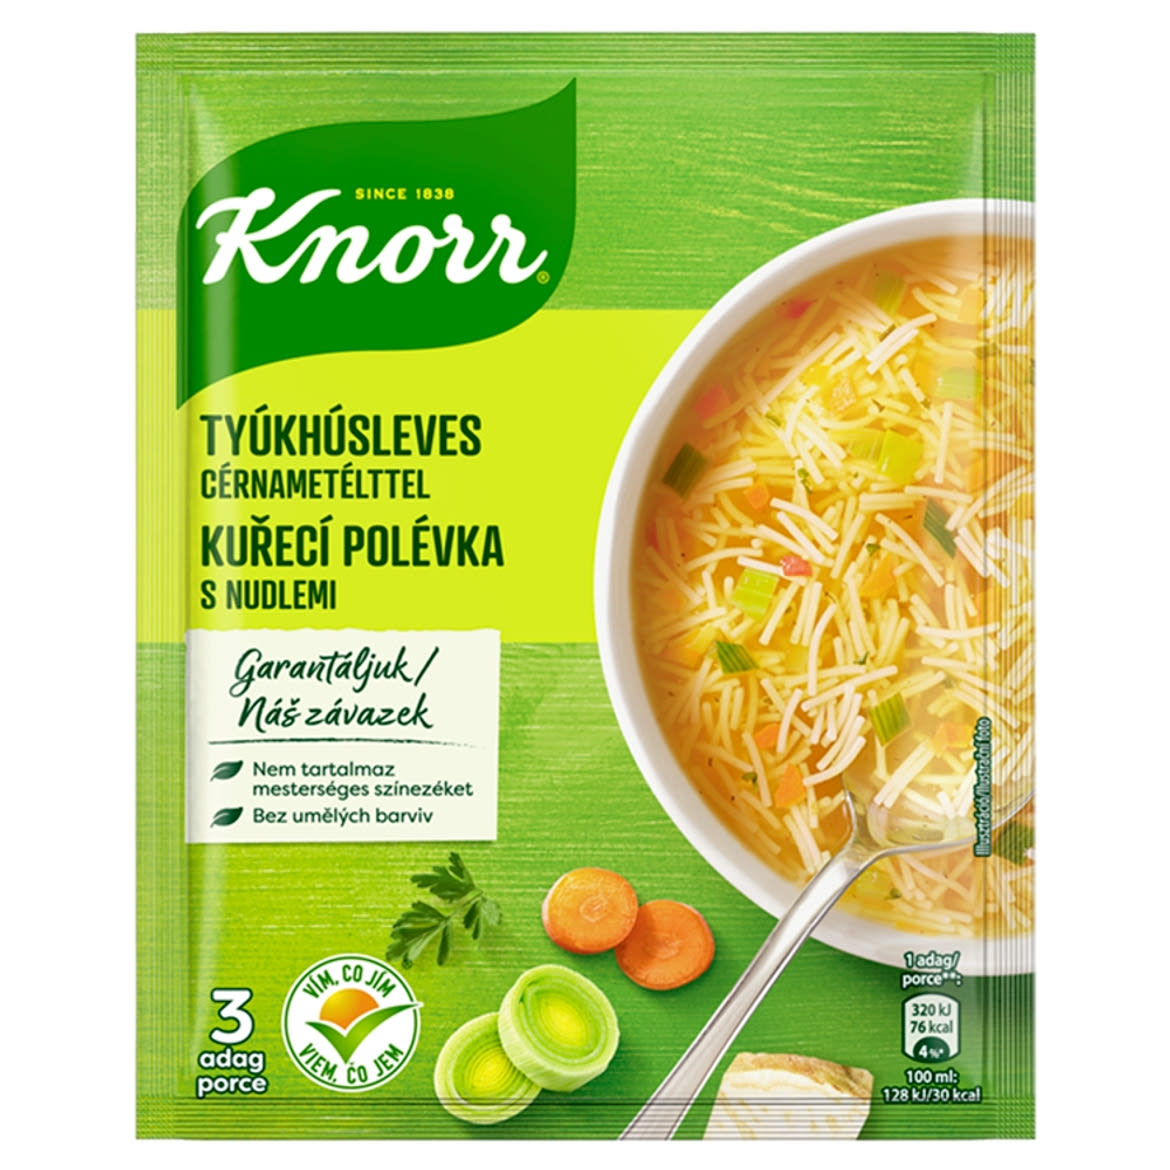 Knorr tyúkhúsleves cérnametélttel